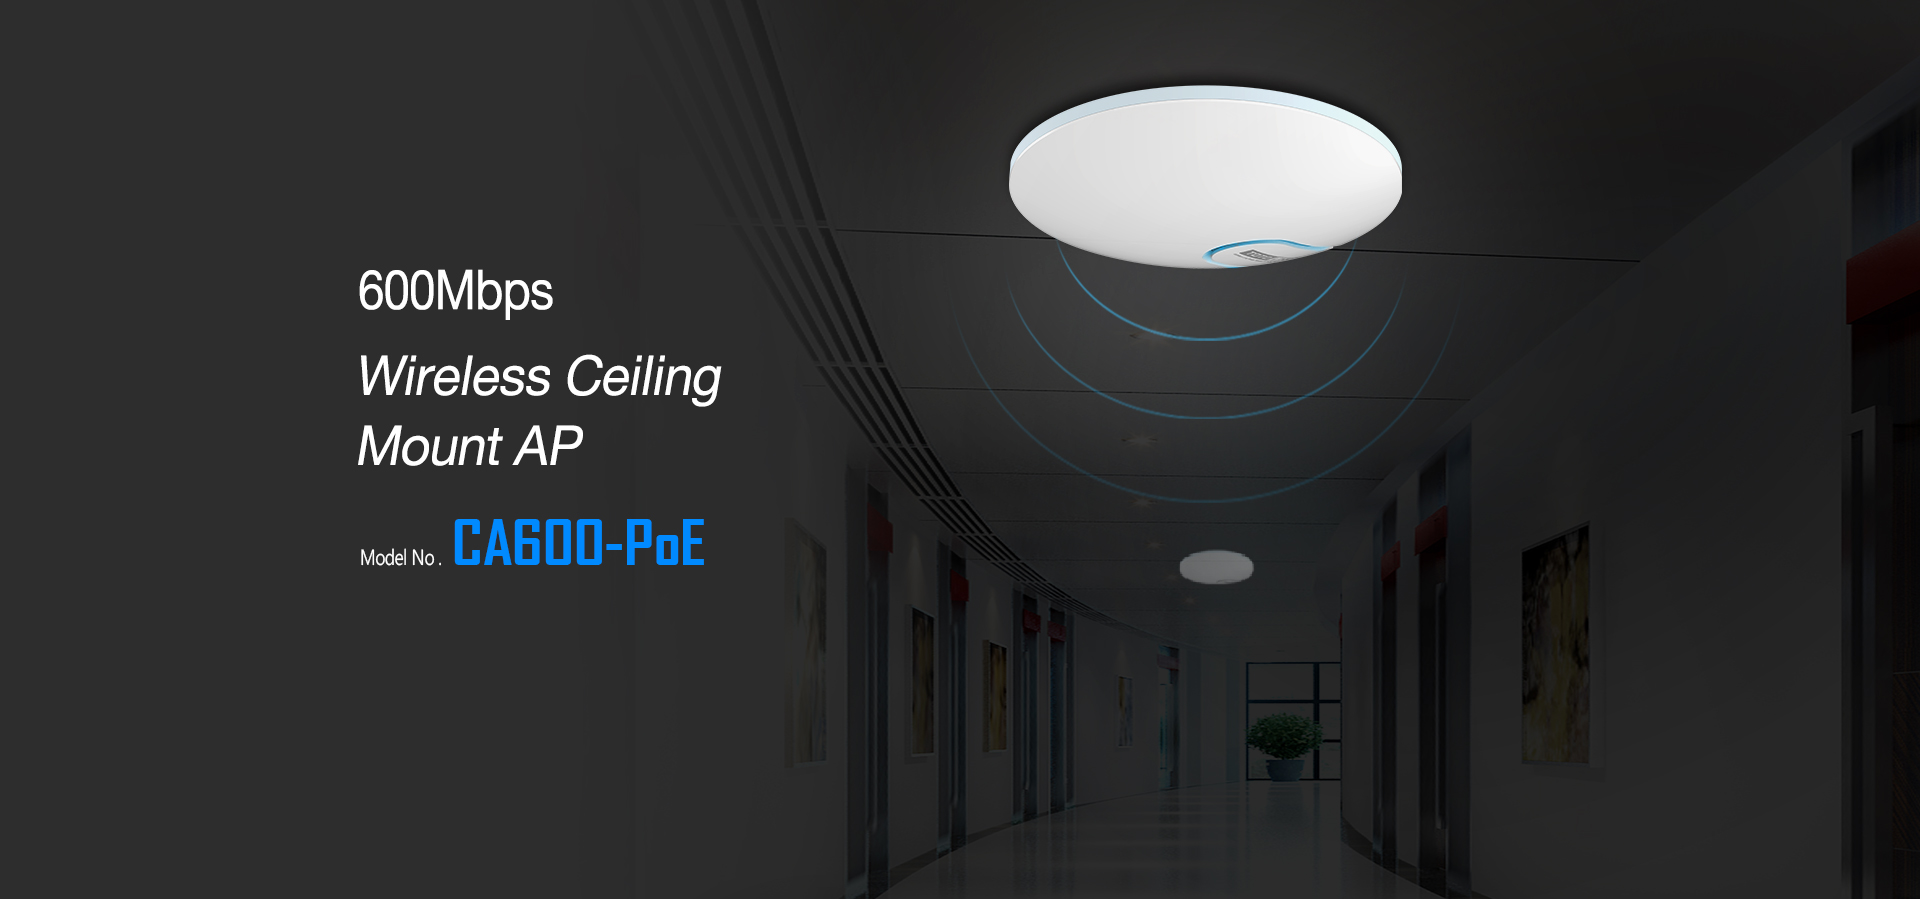 CA600-PoE-600Mbps-Wireless-Ceiling-Mount-Ap